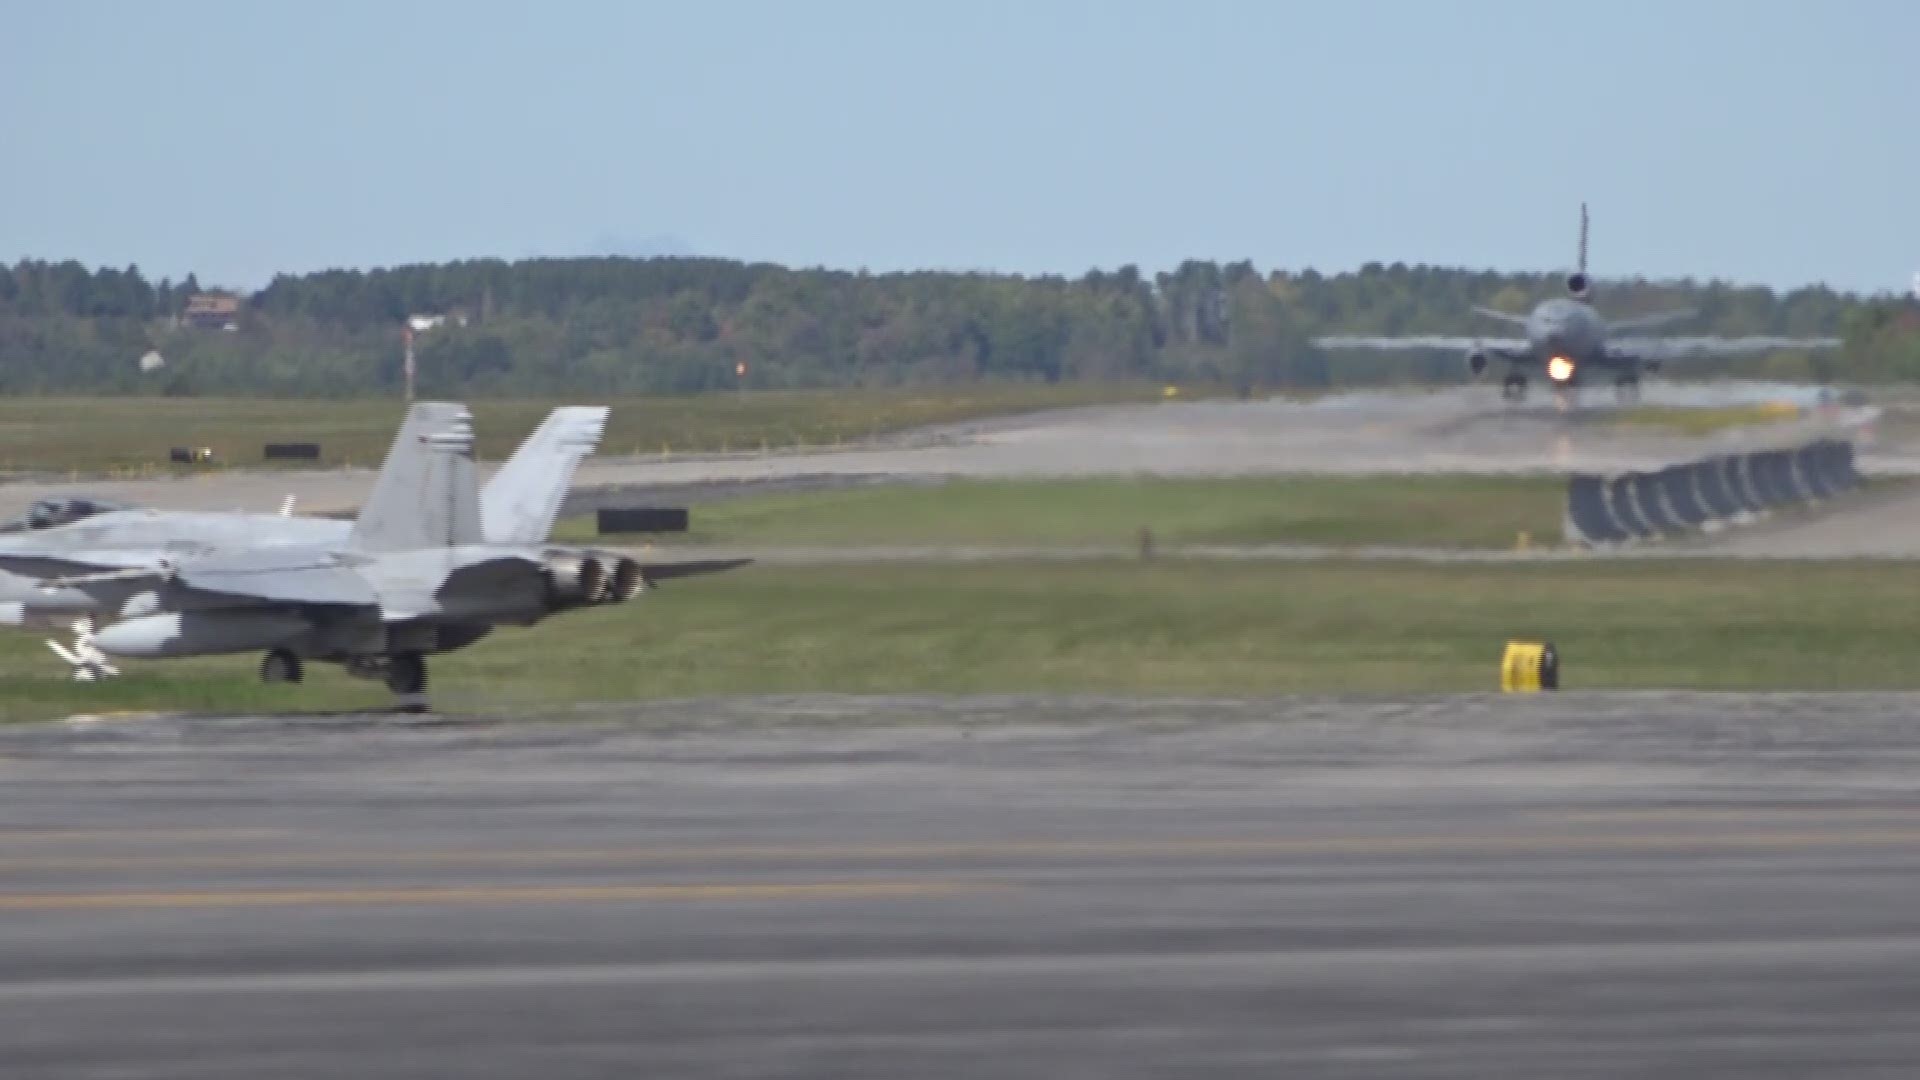 6 Norwiegen F-18's took off in front of the Bangor crowd